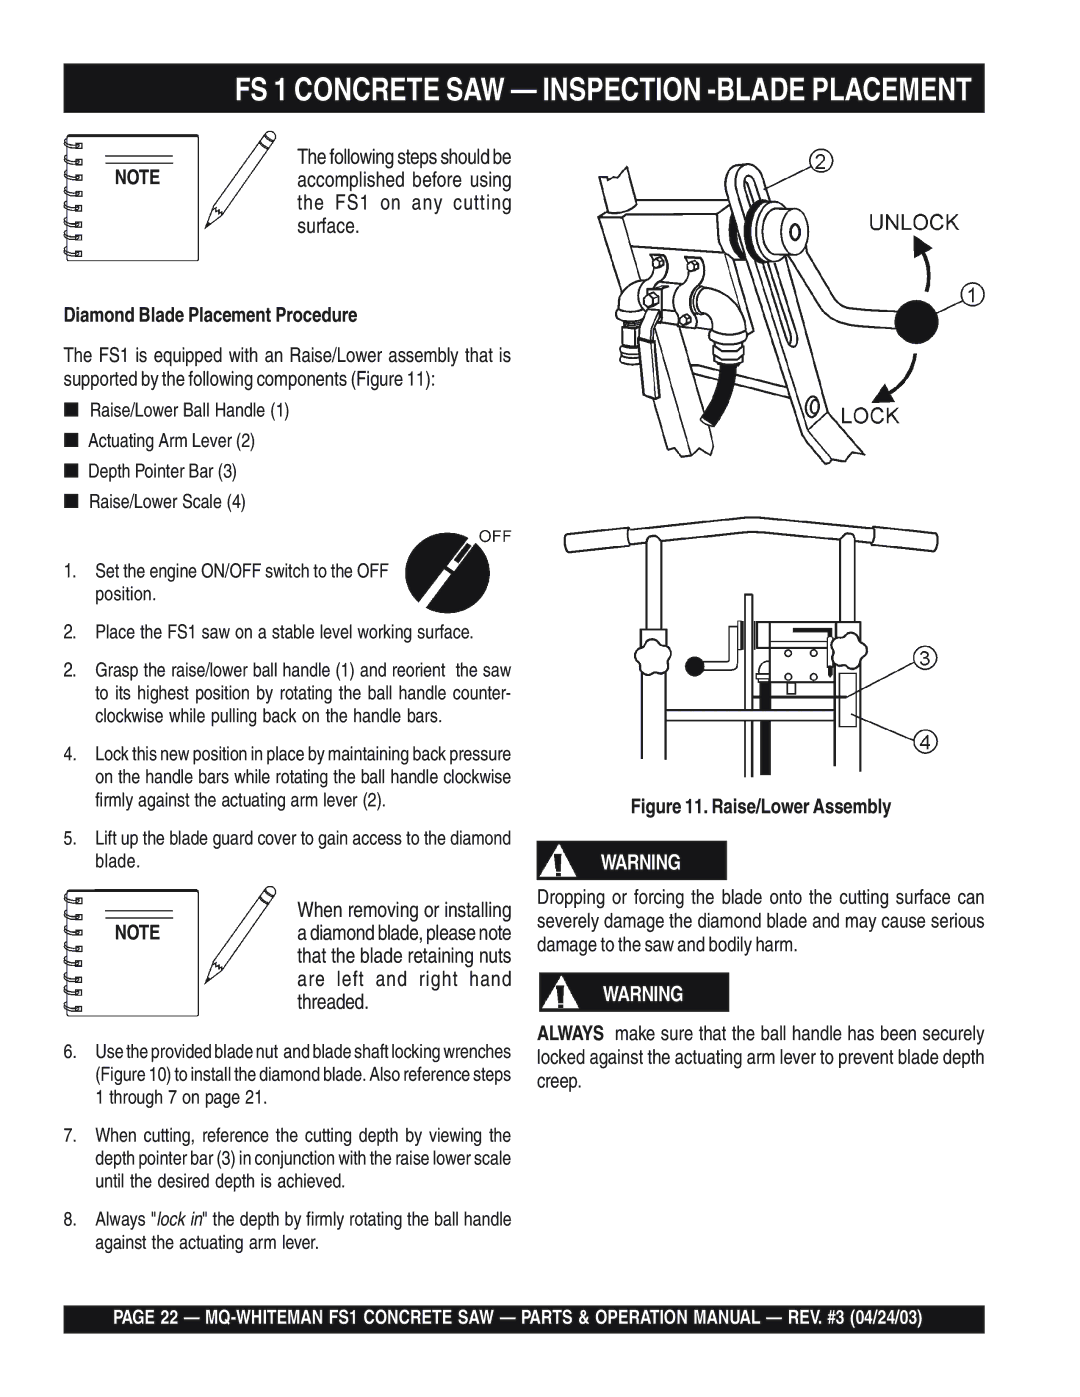 Multiquip operation manual FS 1 Concrete SAW Inspection -BLADE Placement, Diamond Blade Placement Procedure 